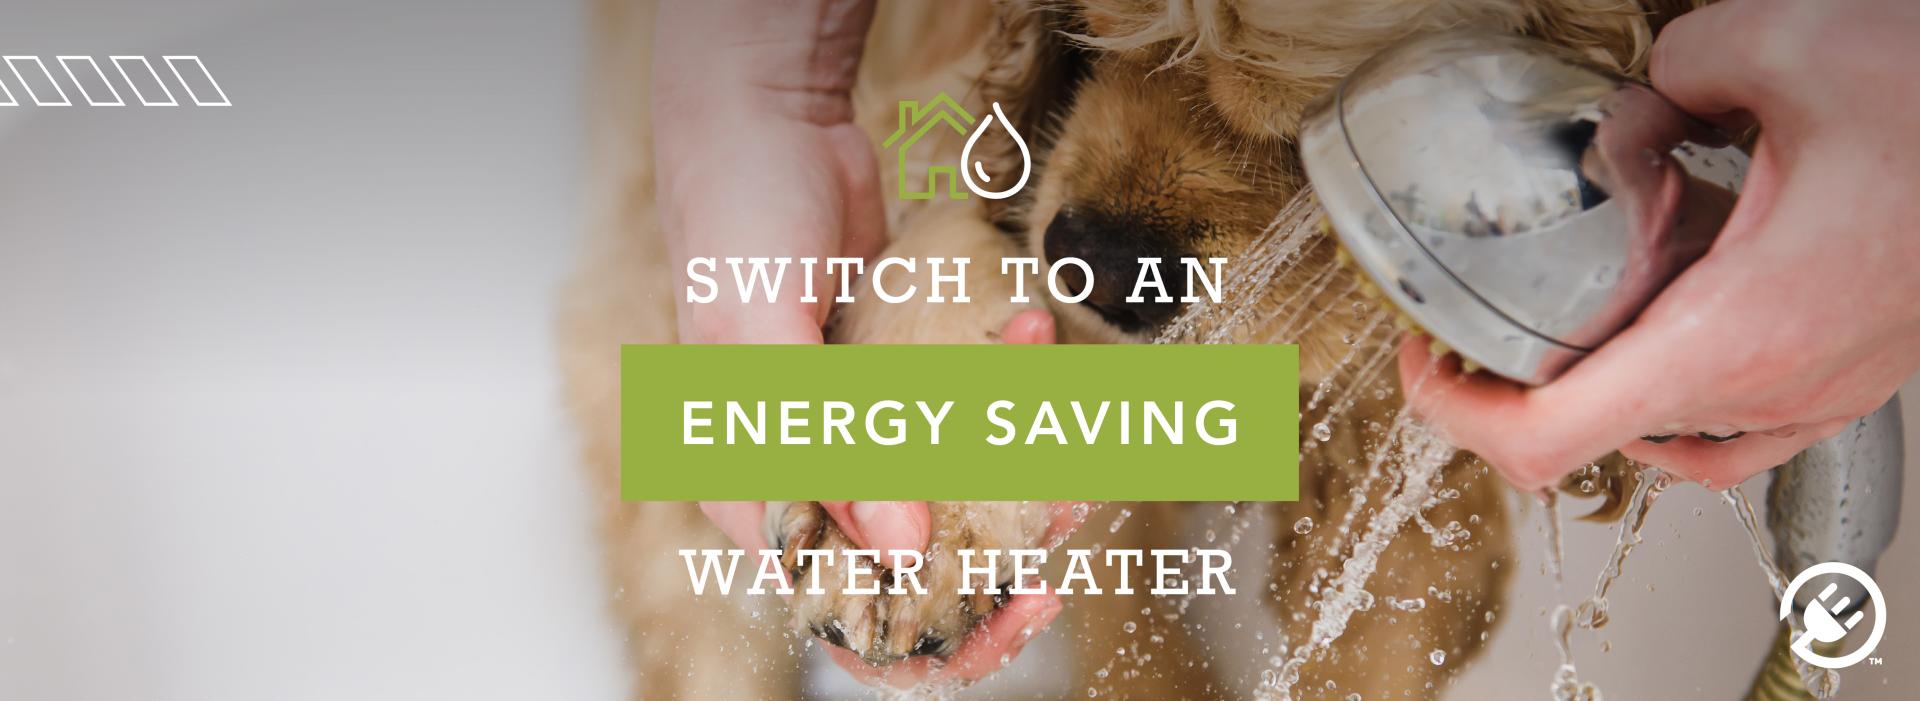 Energy Saving Water Heaters